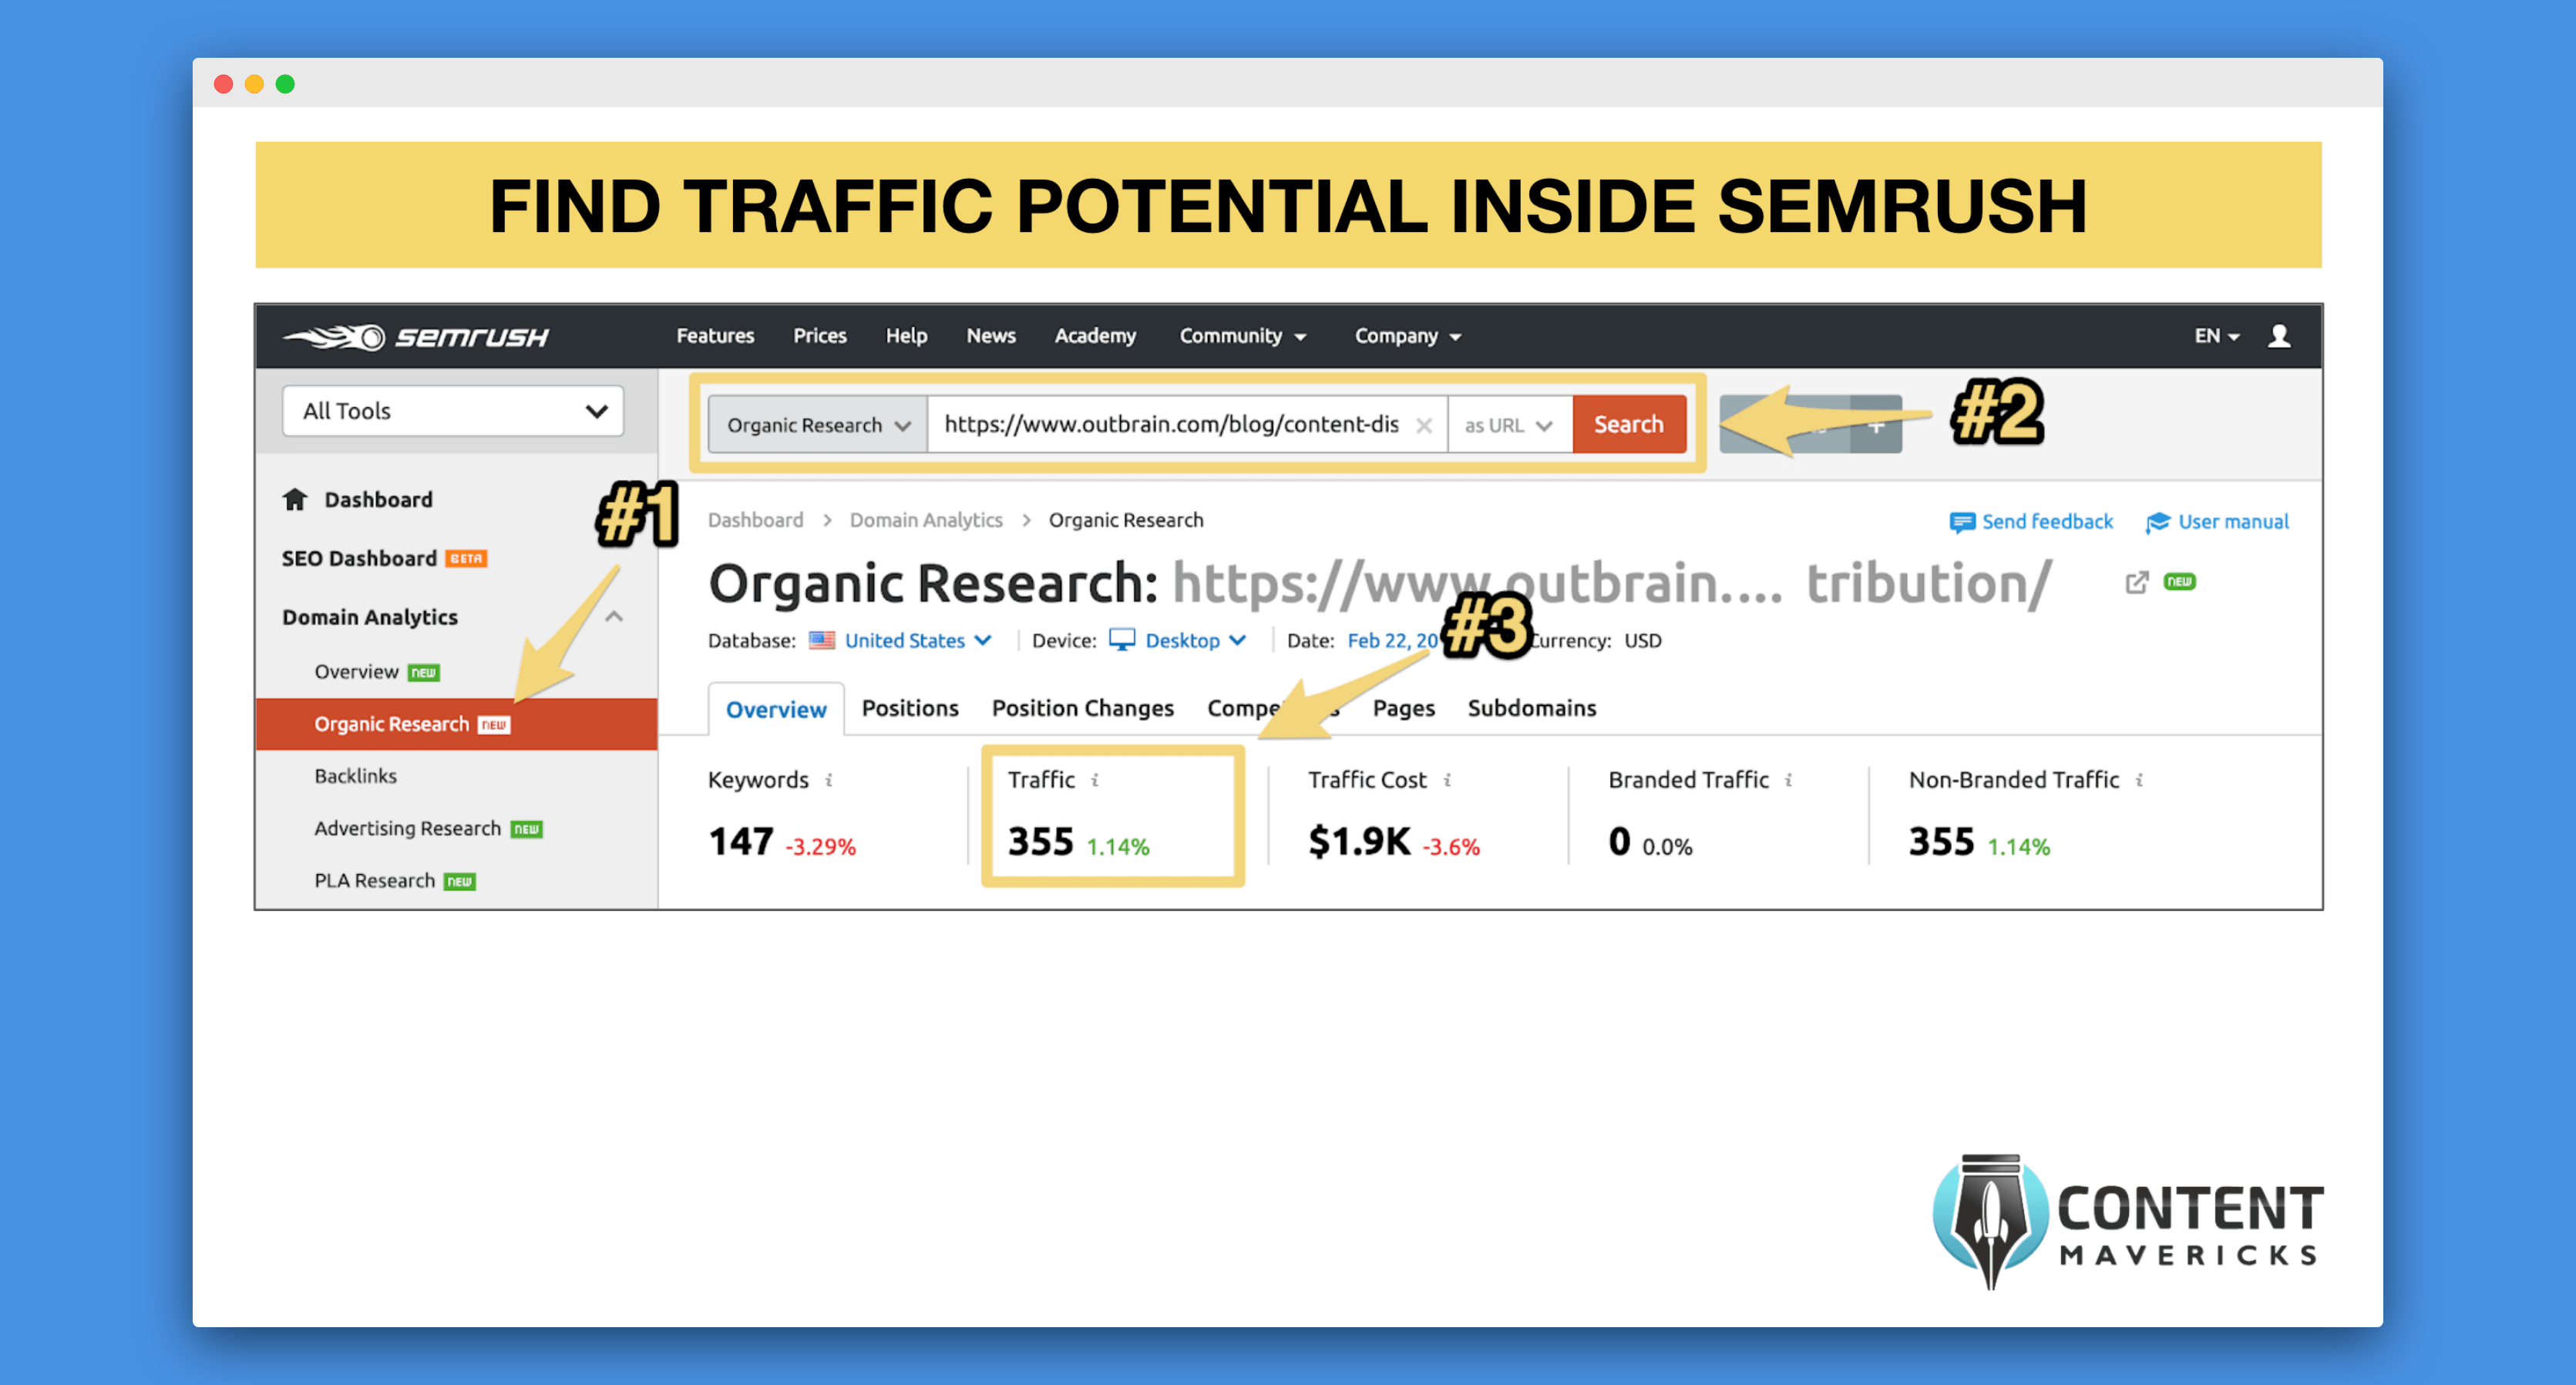 semrush traffic potential image